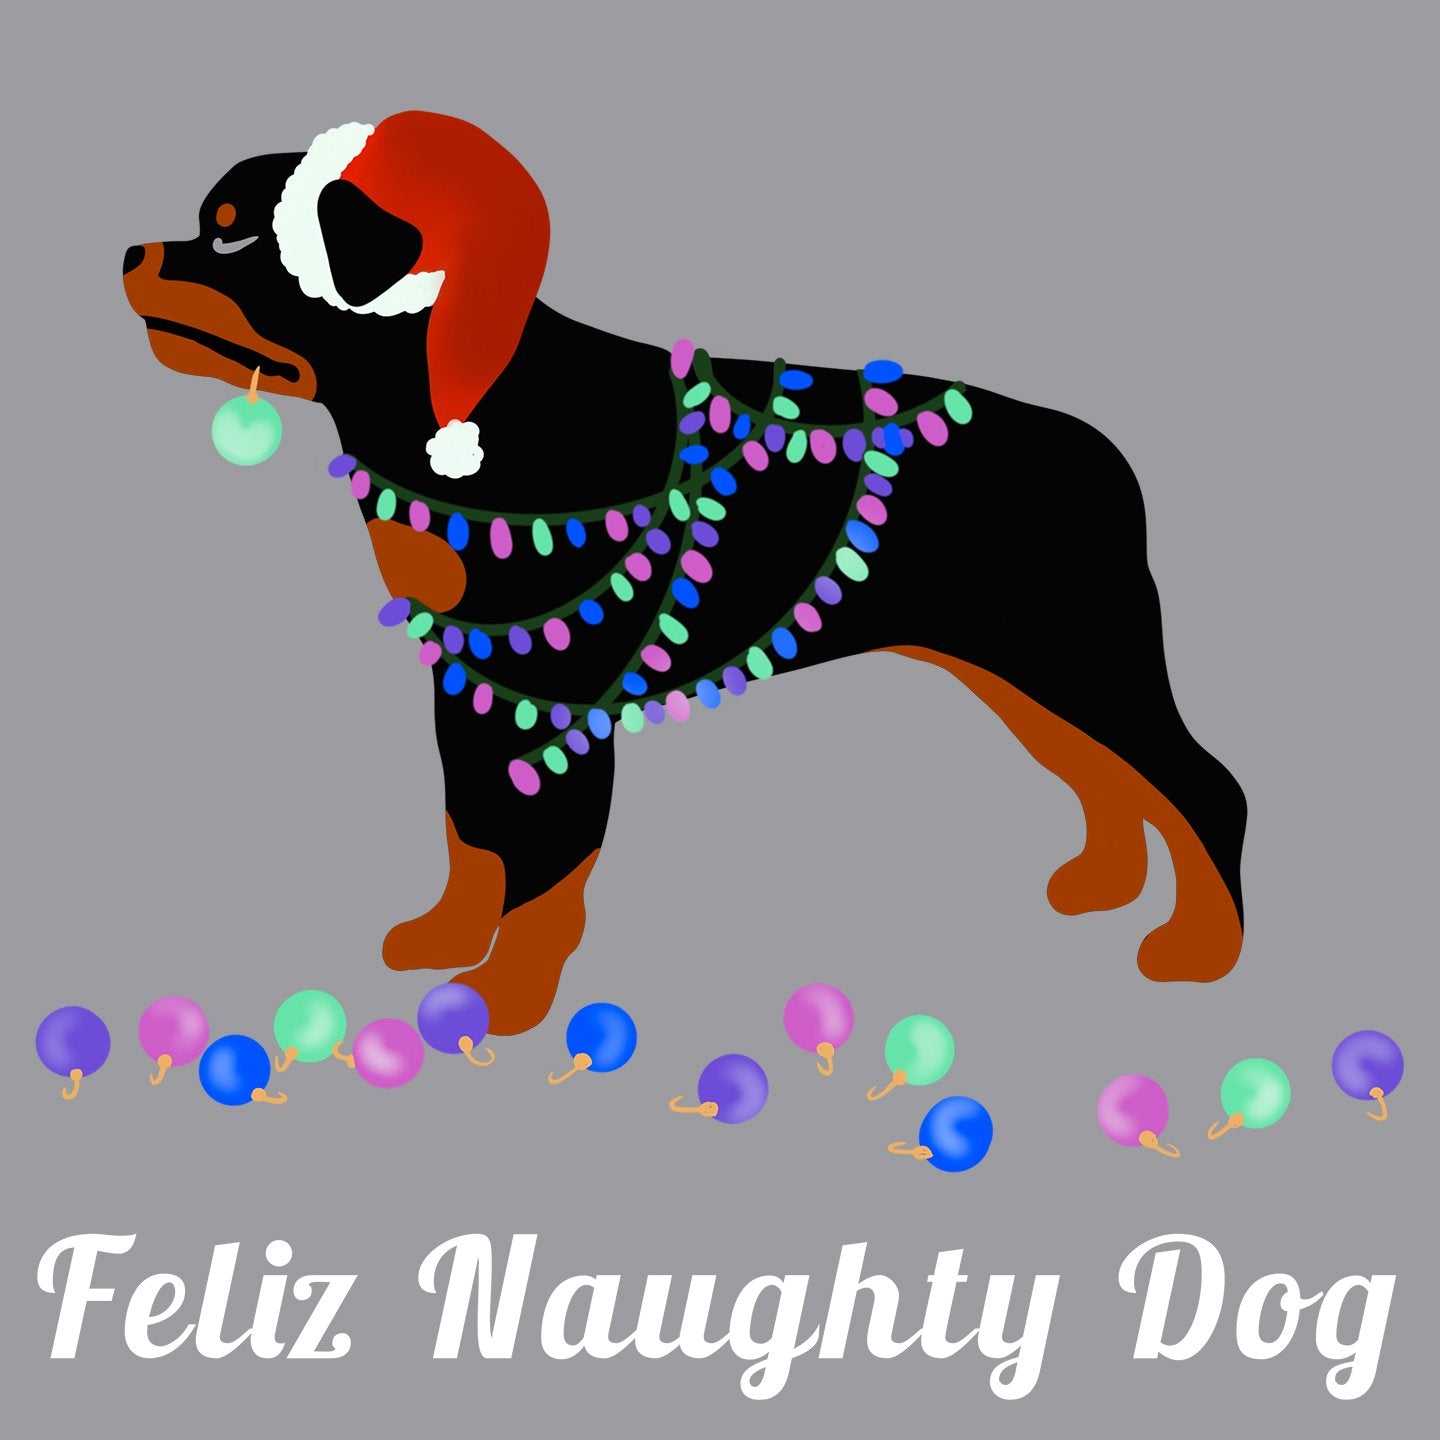 Feliz Naughty Dog Rottweiler - Adult Unisex Hoodie Sweatshirt